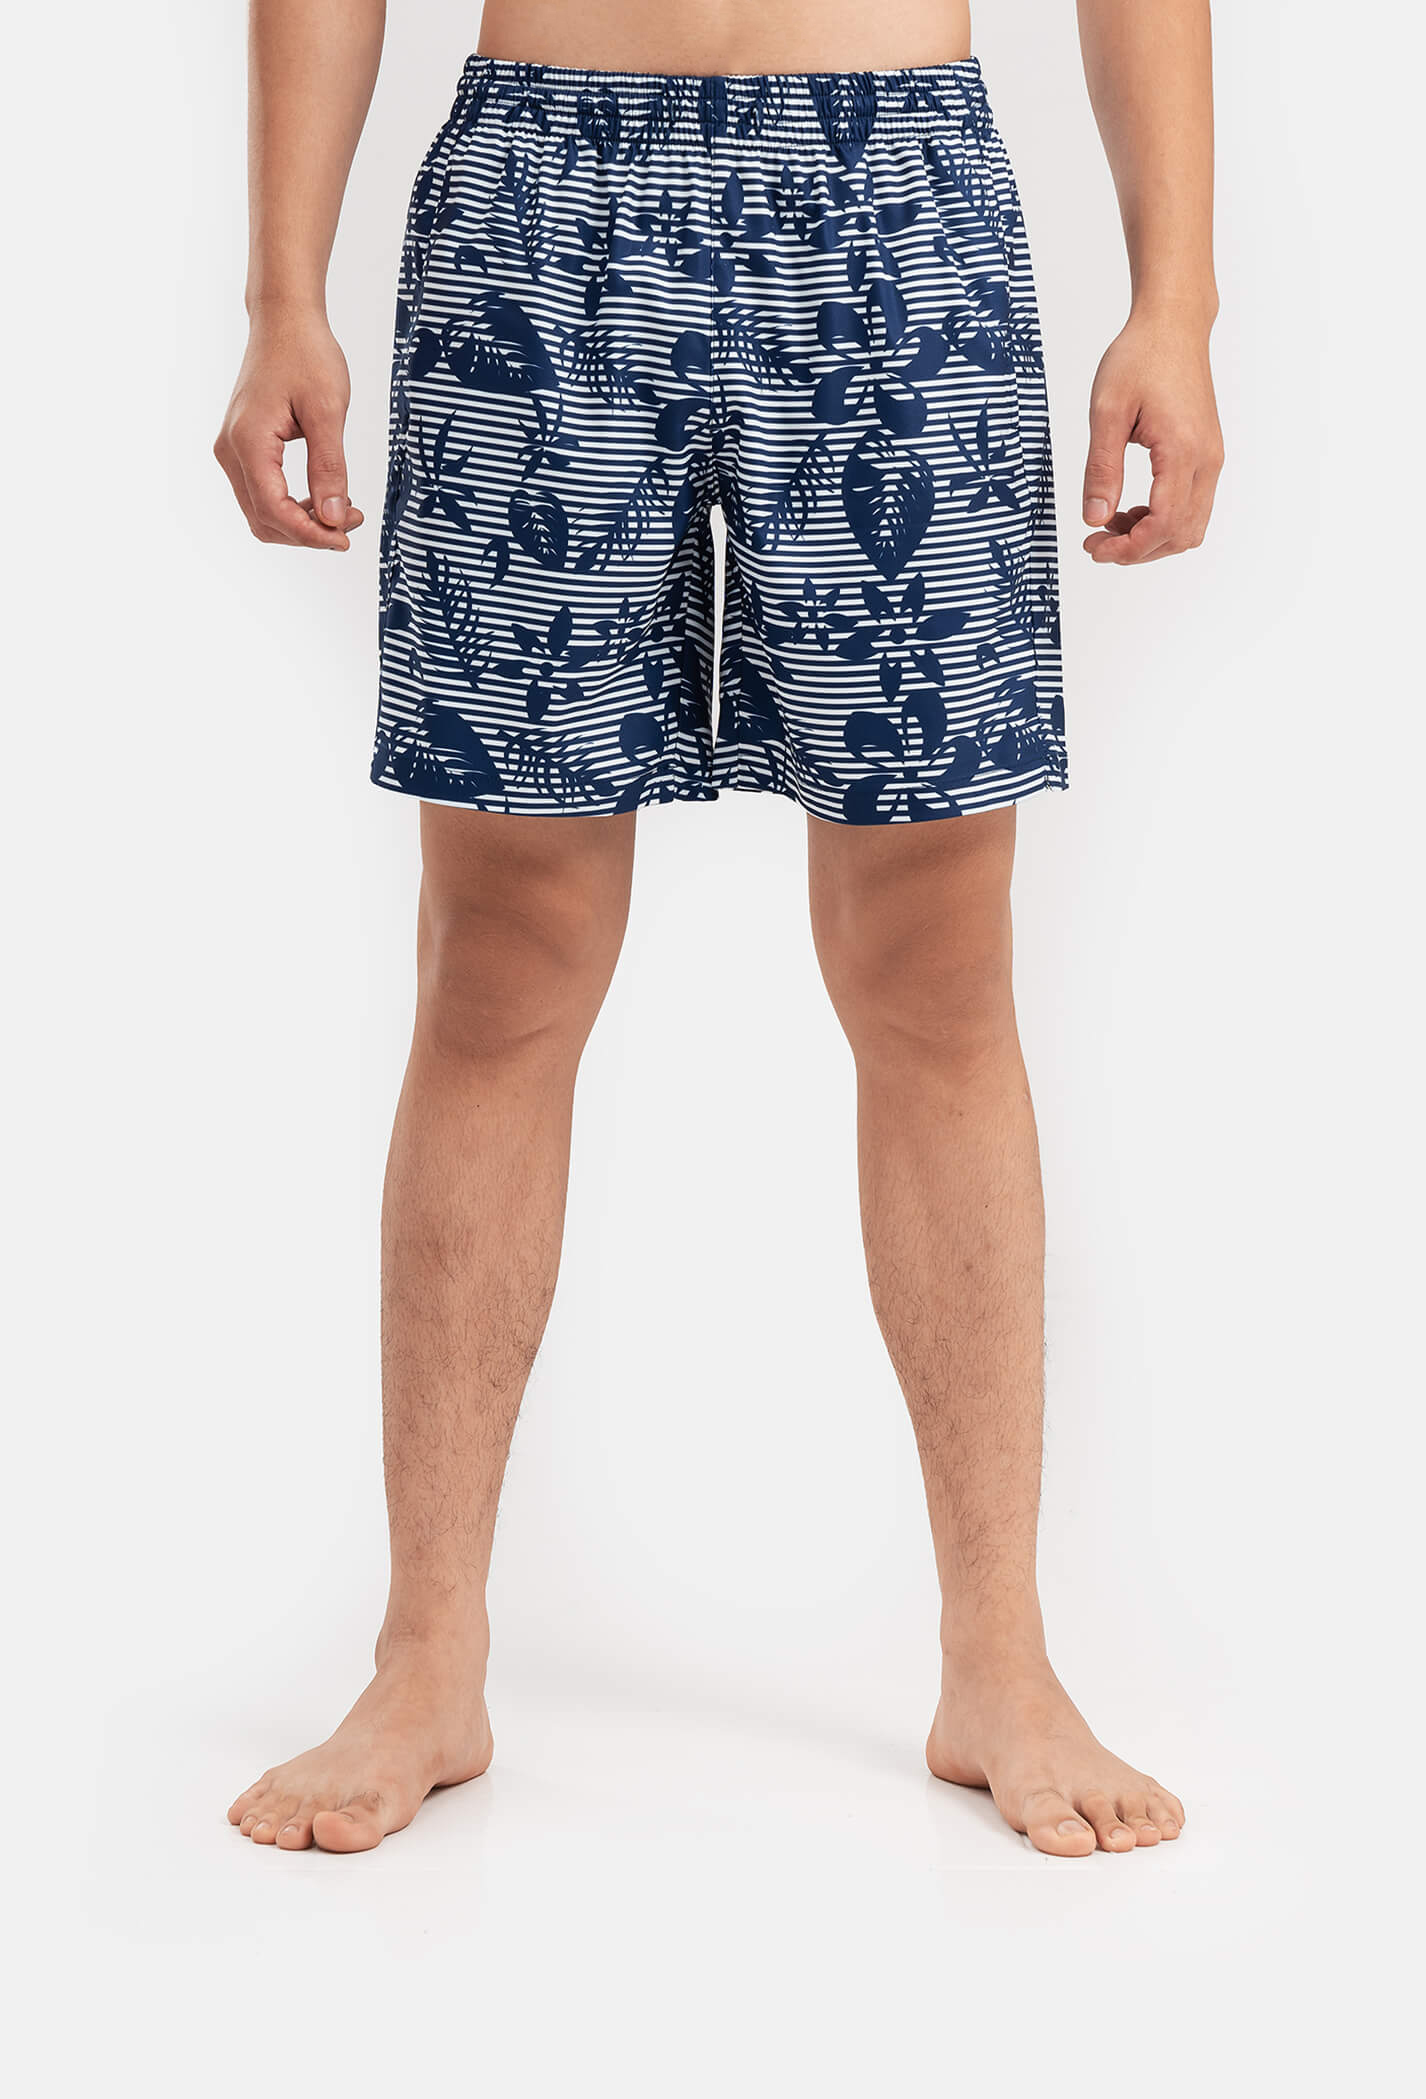 Outlet - Quần shorts nam Classic Beach có túi khoá sau xanh-dam 3